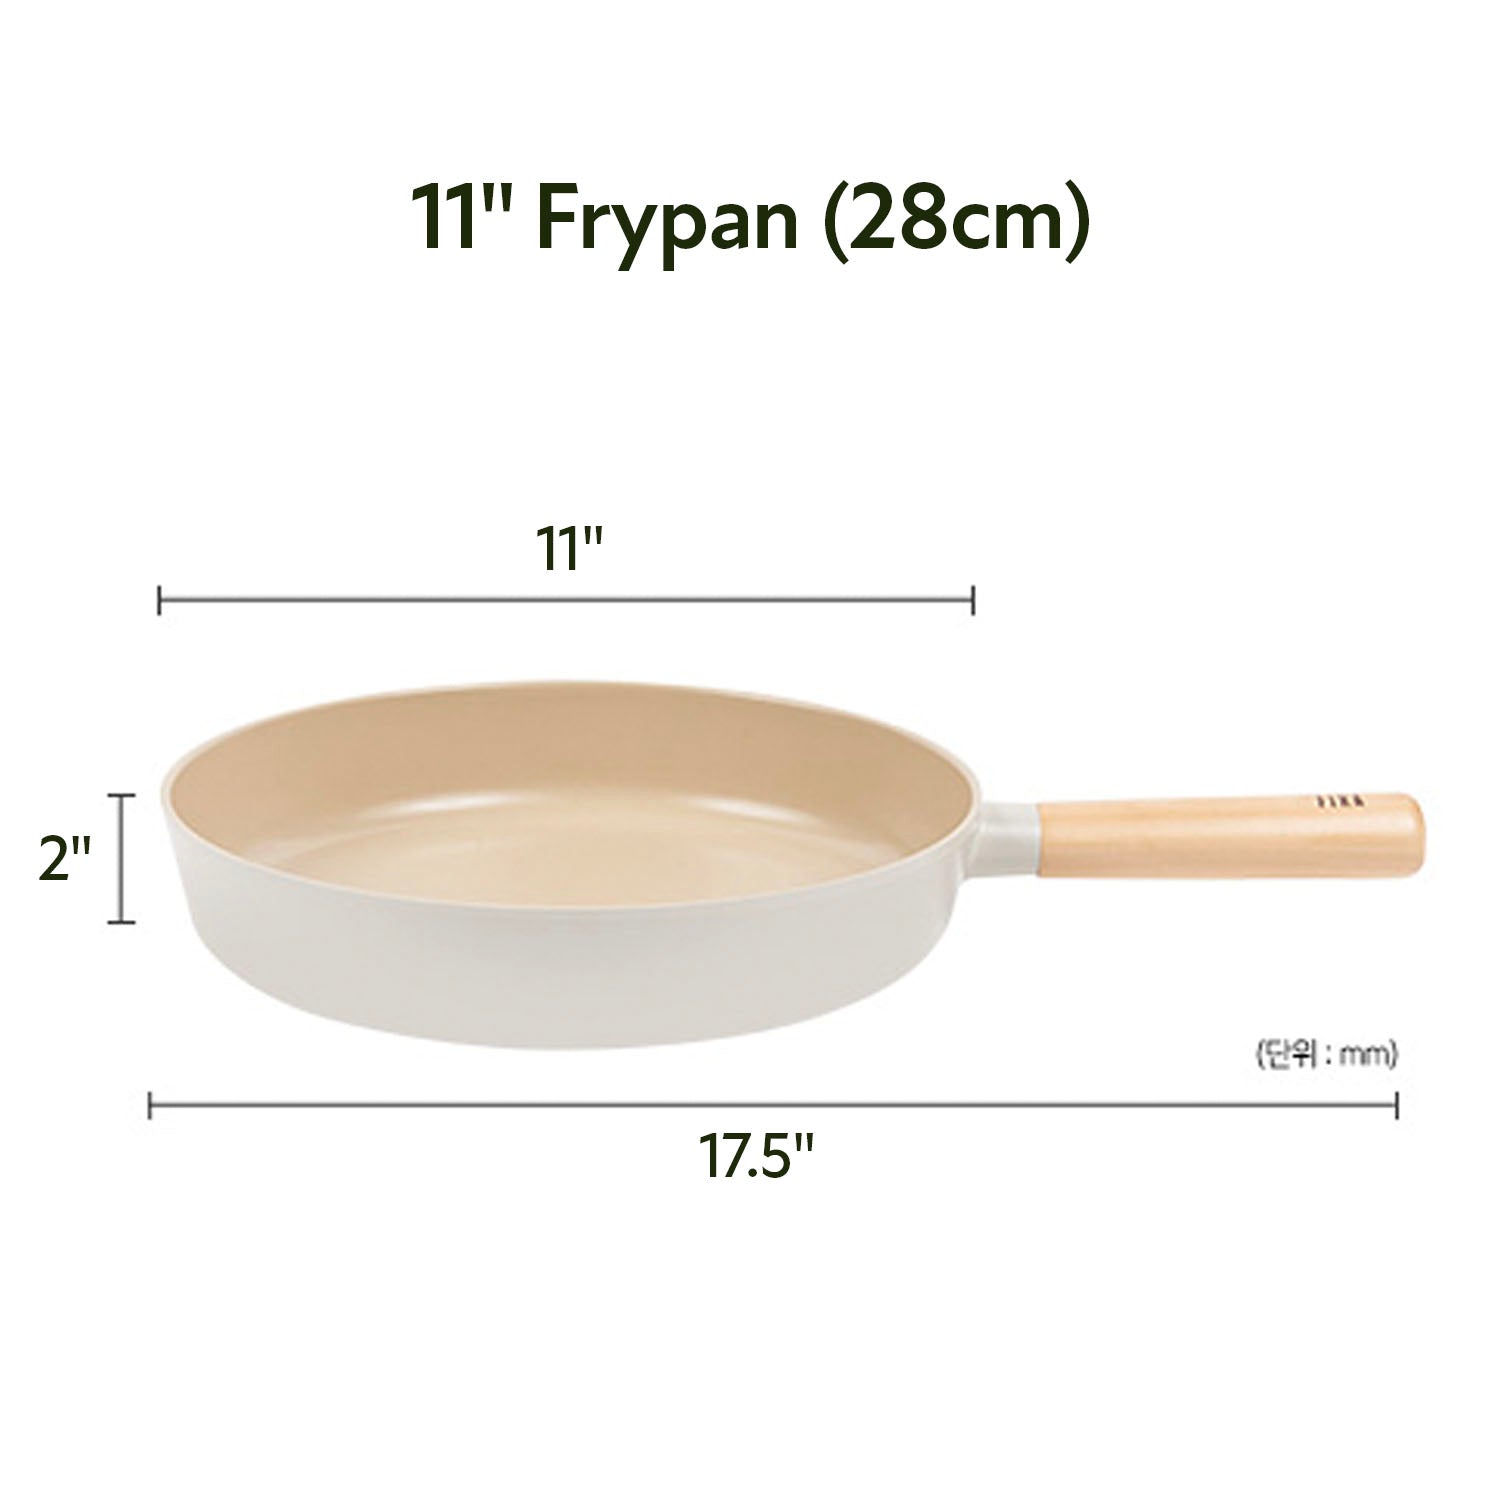 FIKA 11 Frypan (28cm) – Neoflam